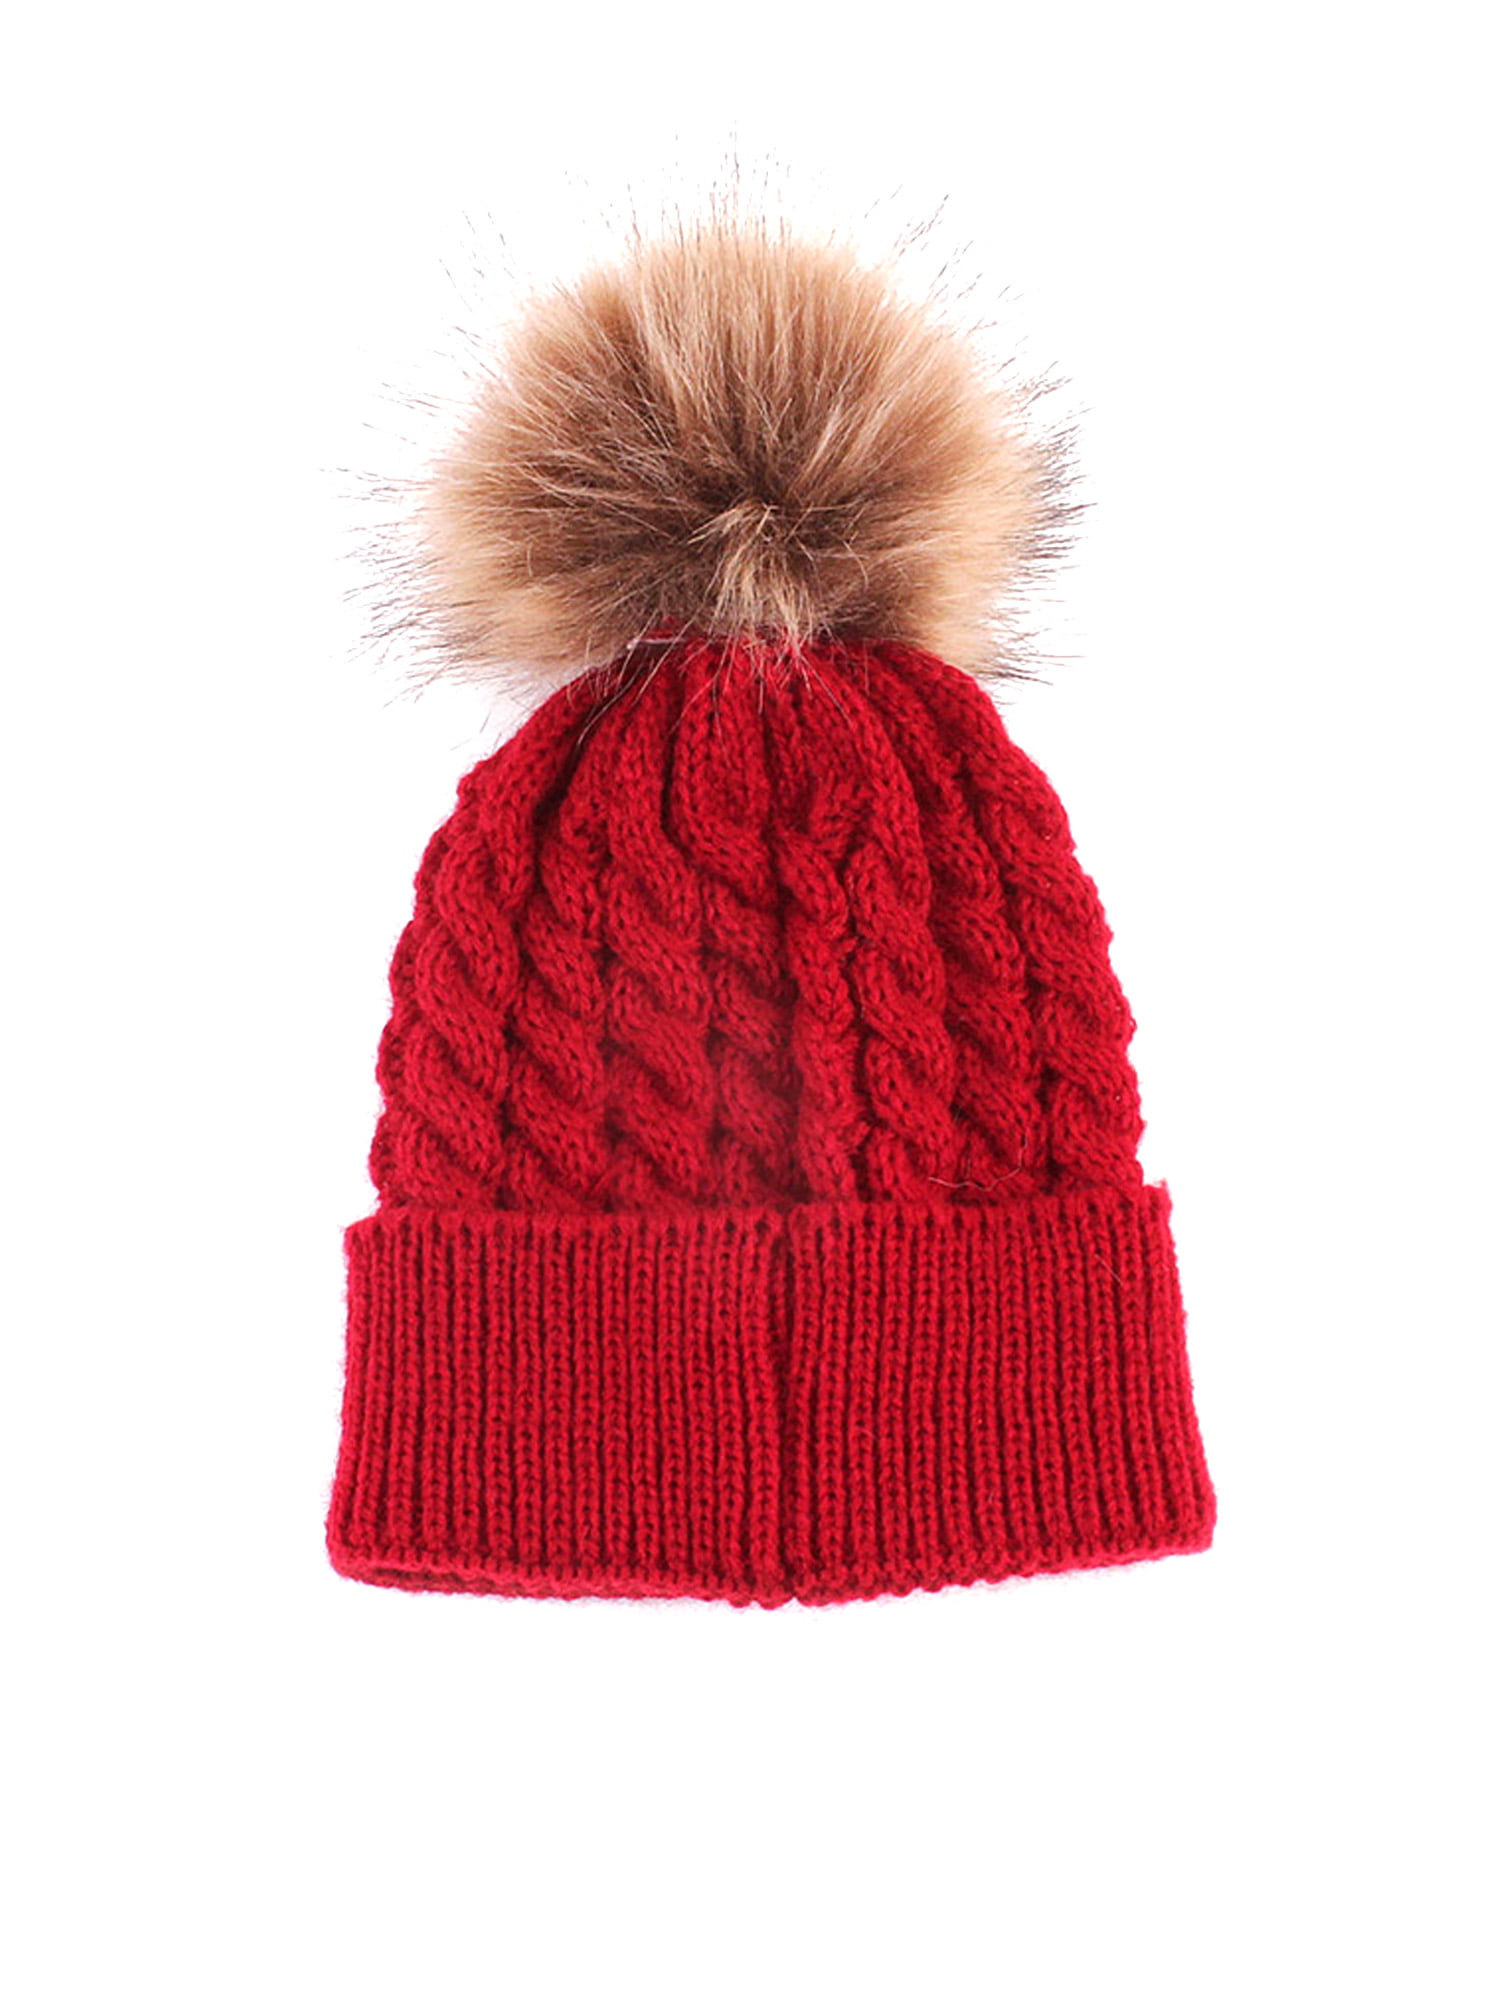 Toddler Kids Girl&Boy Baby Winter Warm Crochet Knit Soft Hat Beanie Hairball Cap 